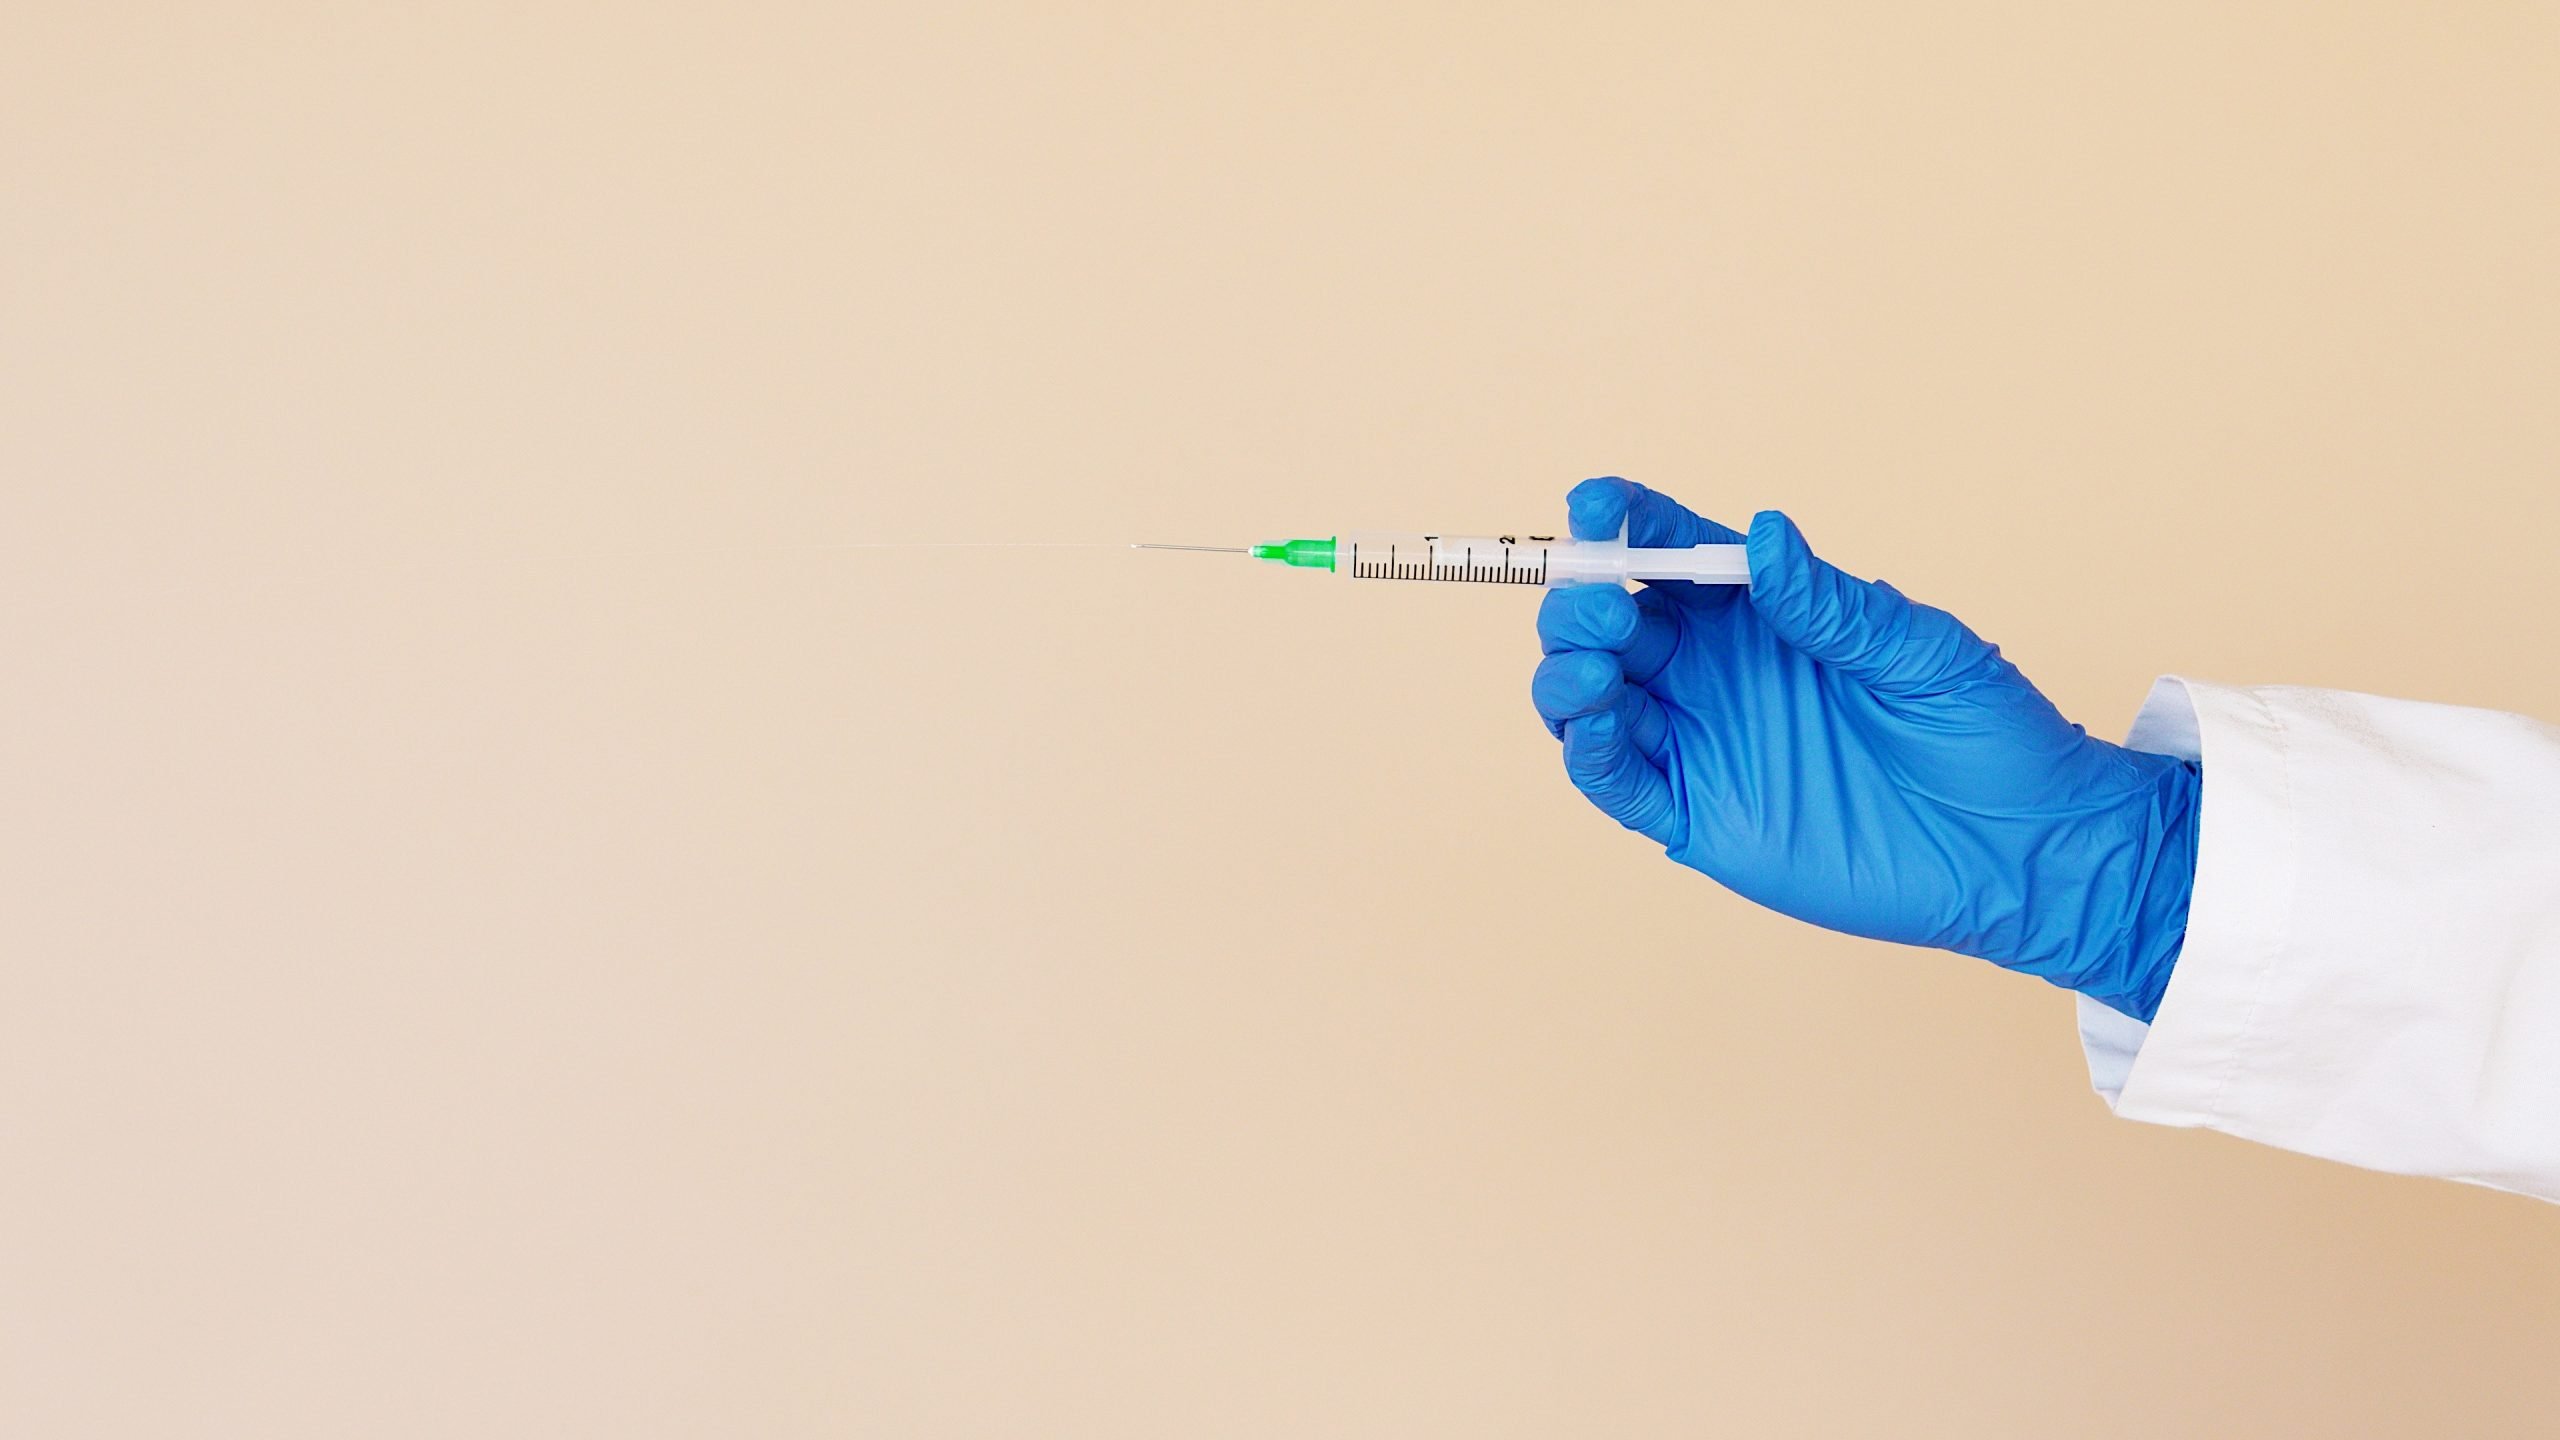 Vaccine syringe covid-19 coronavirus